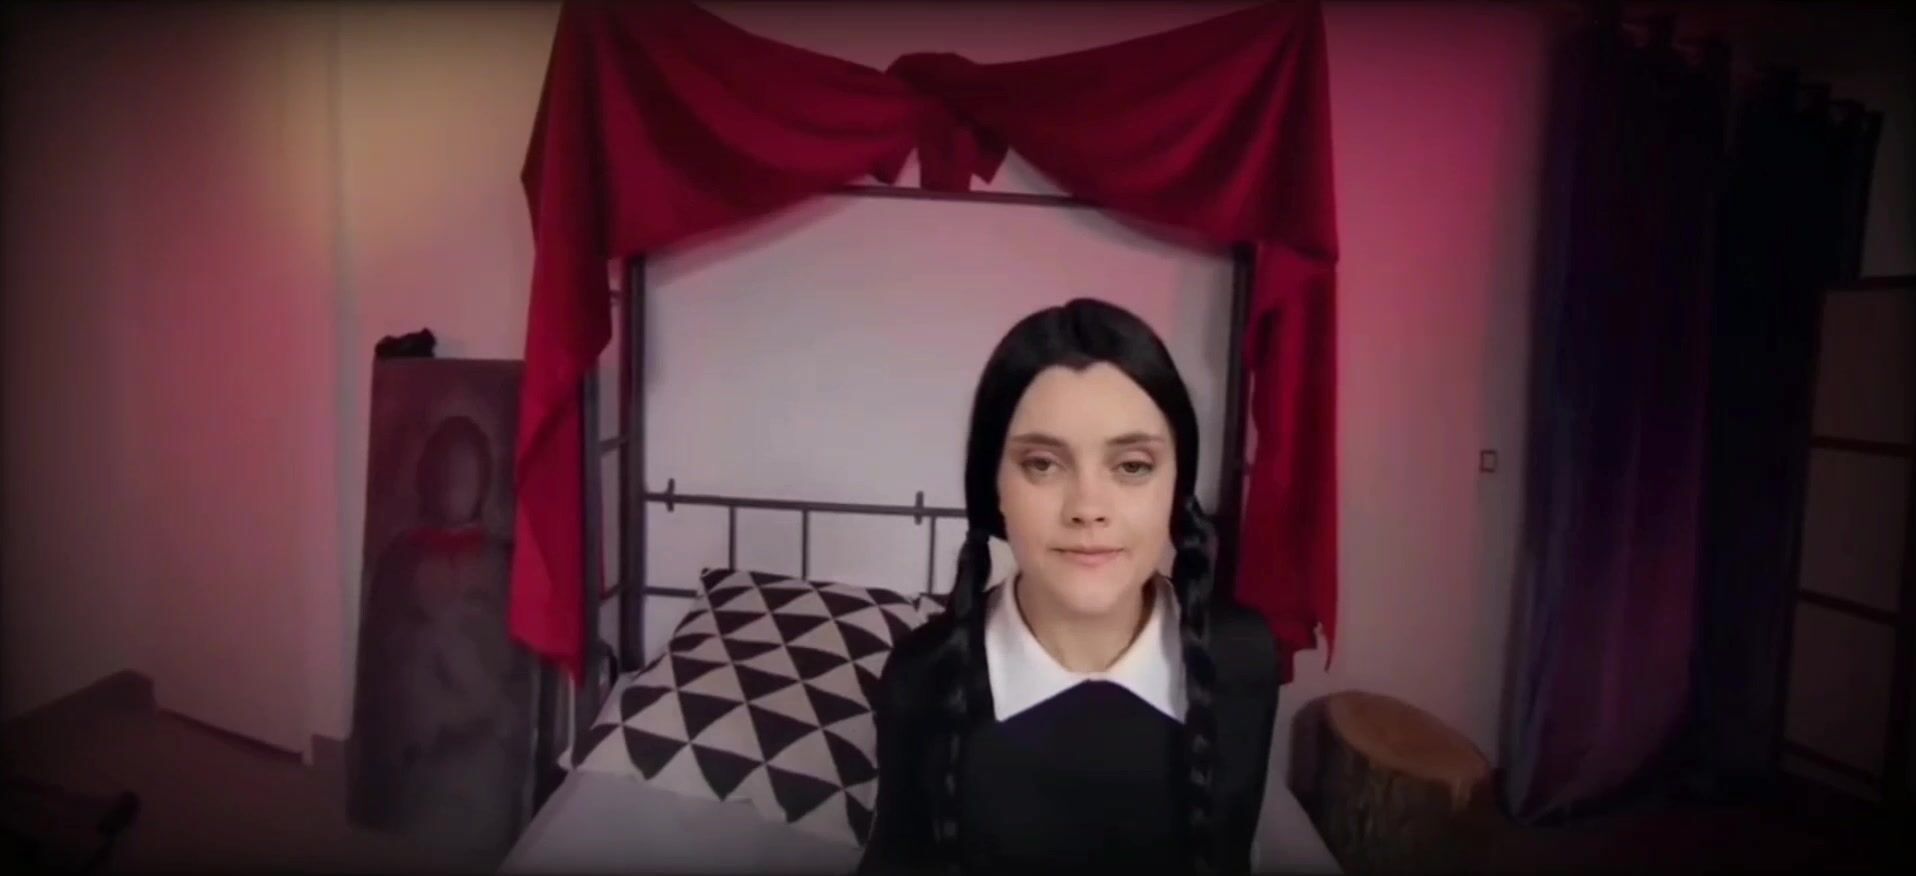 Wednesday Addams(Christiana Ricci) wants to play